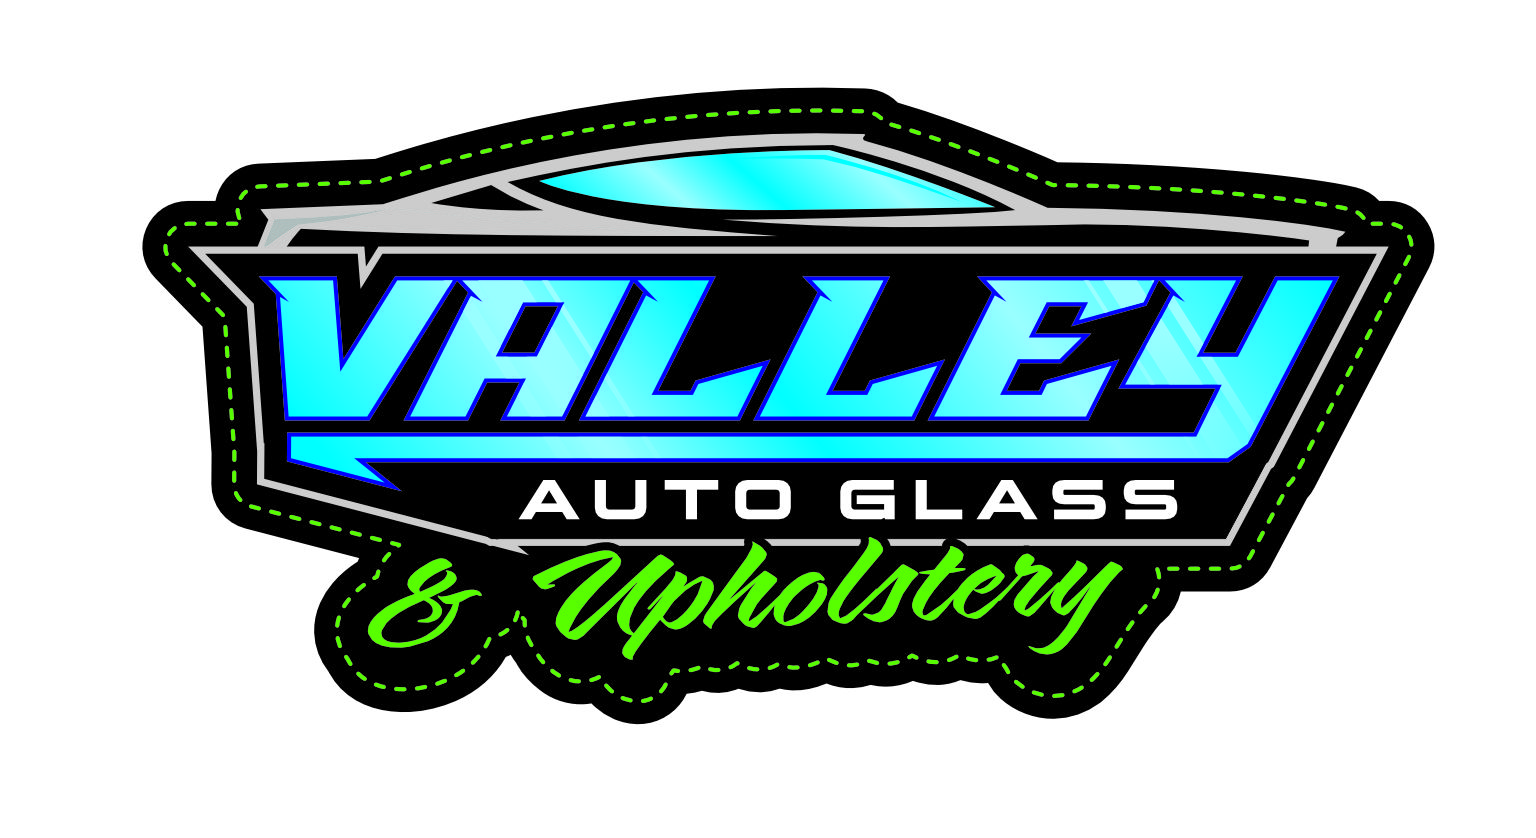 Valley Autoglass Advertisement